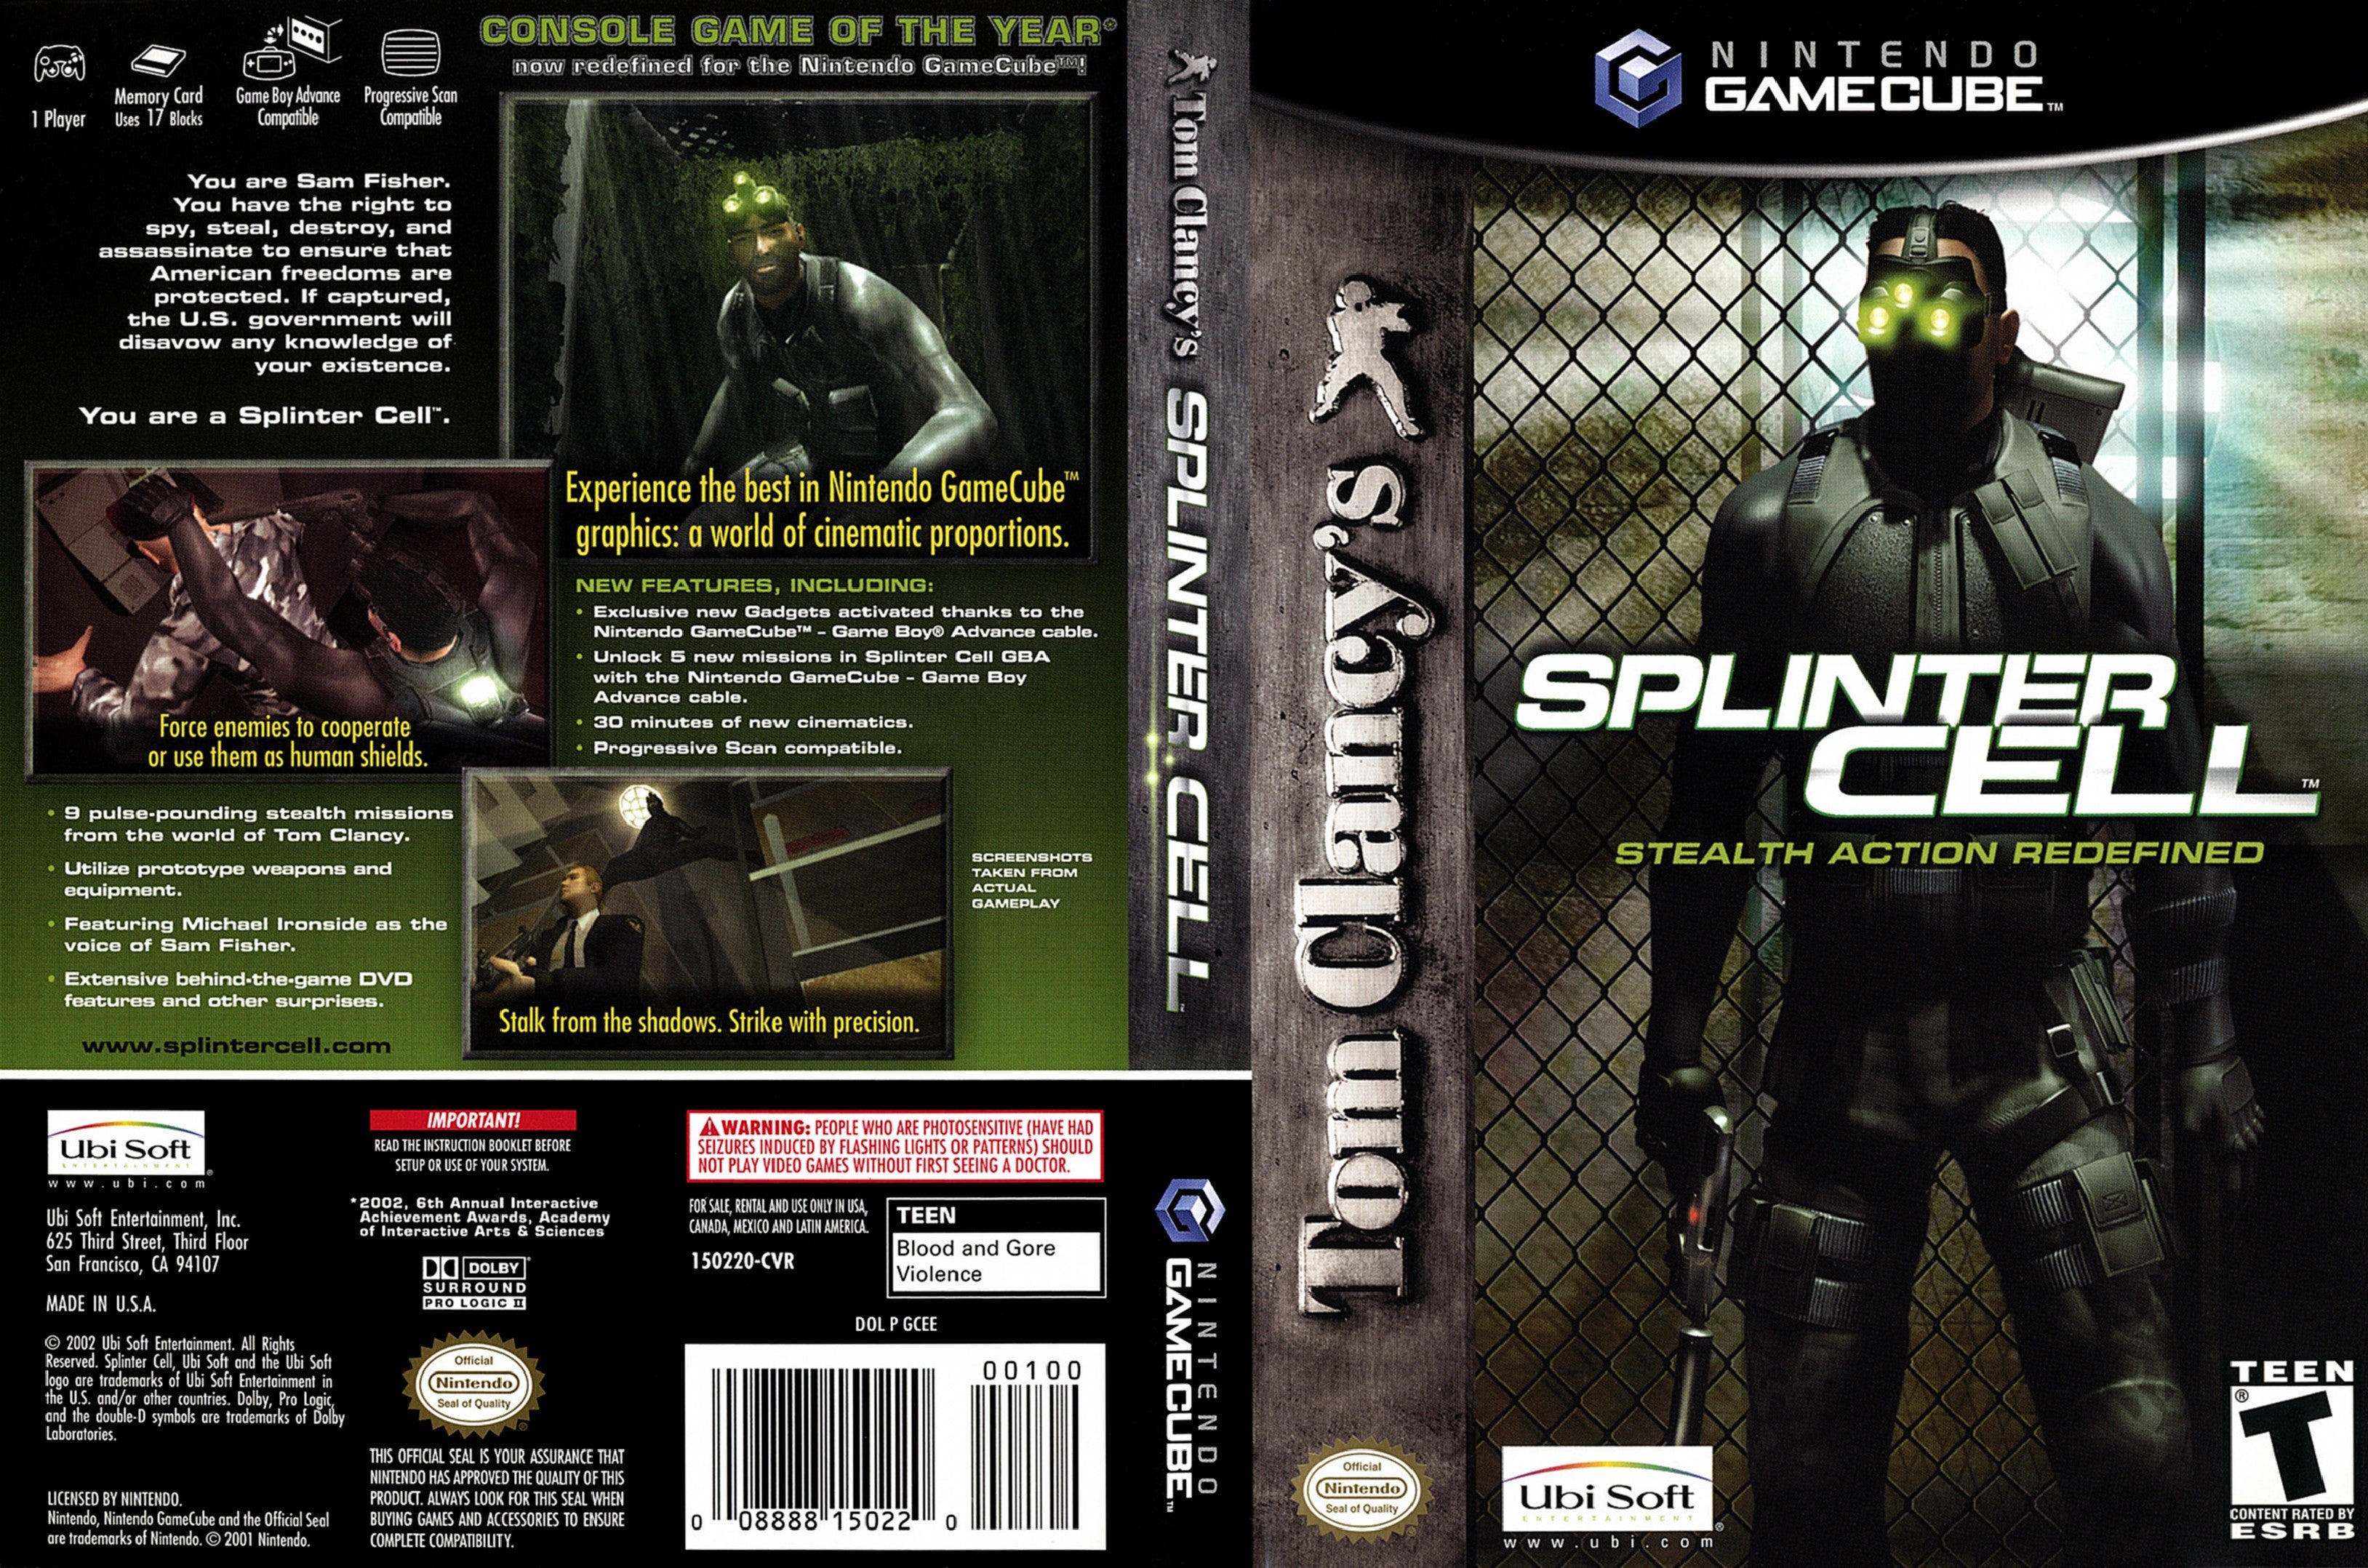 Tom Clancy's Splinter Cell N BL PS2